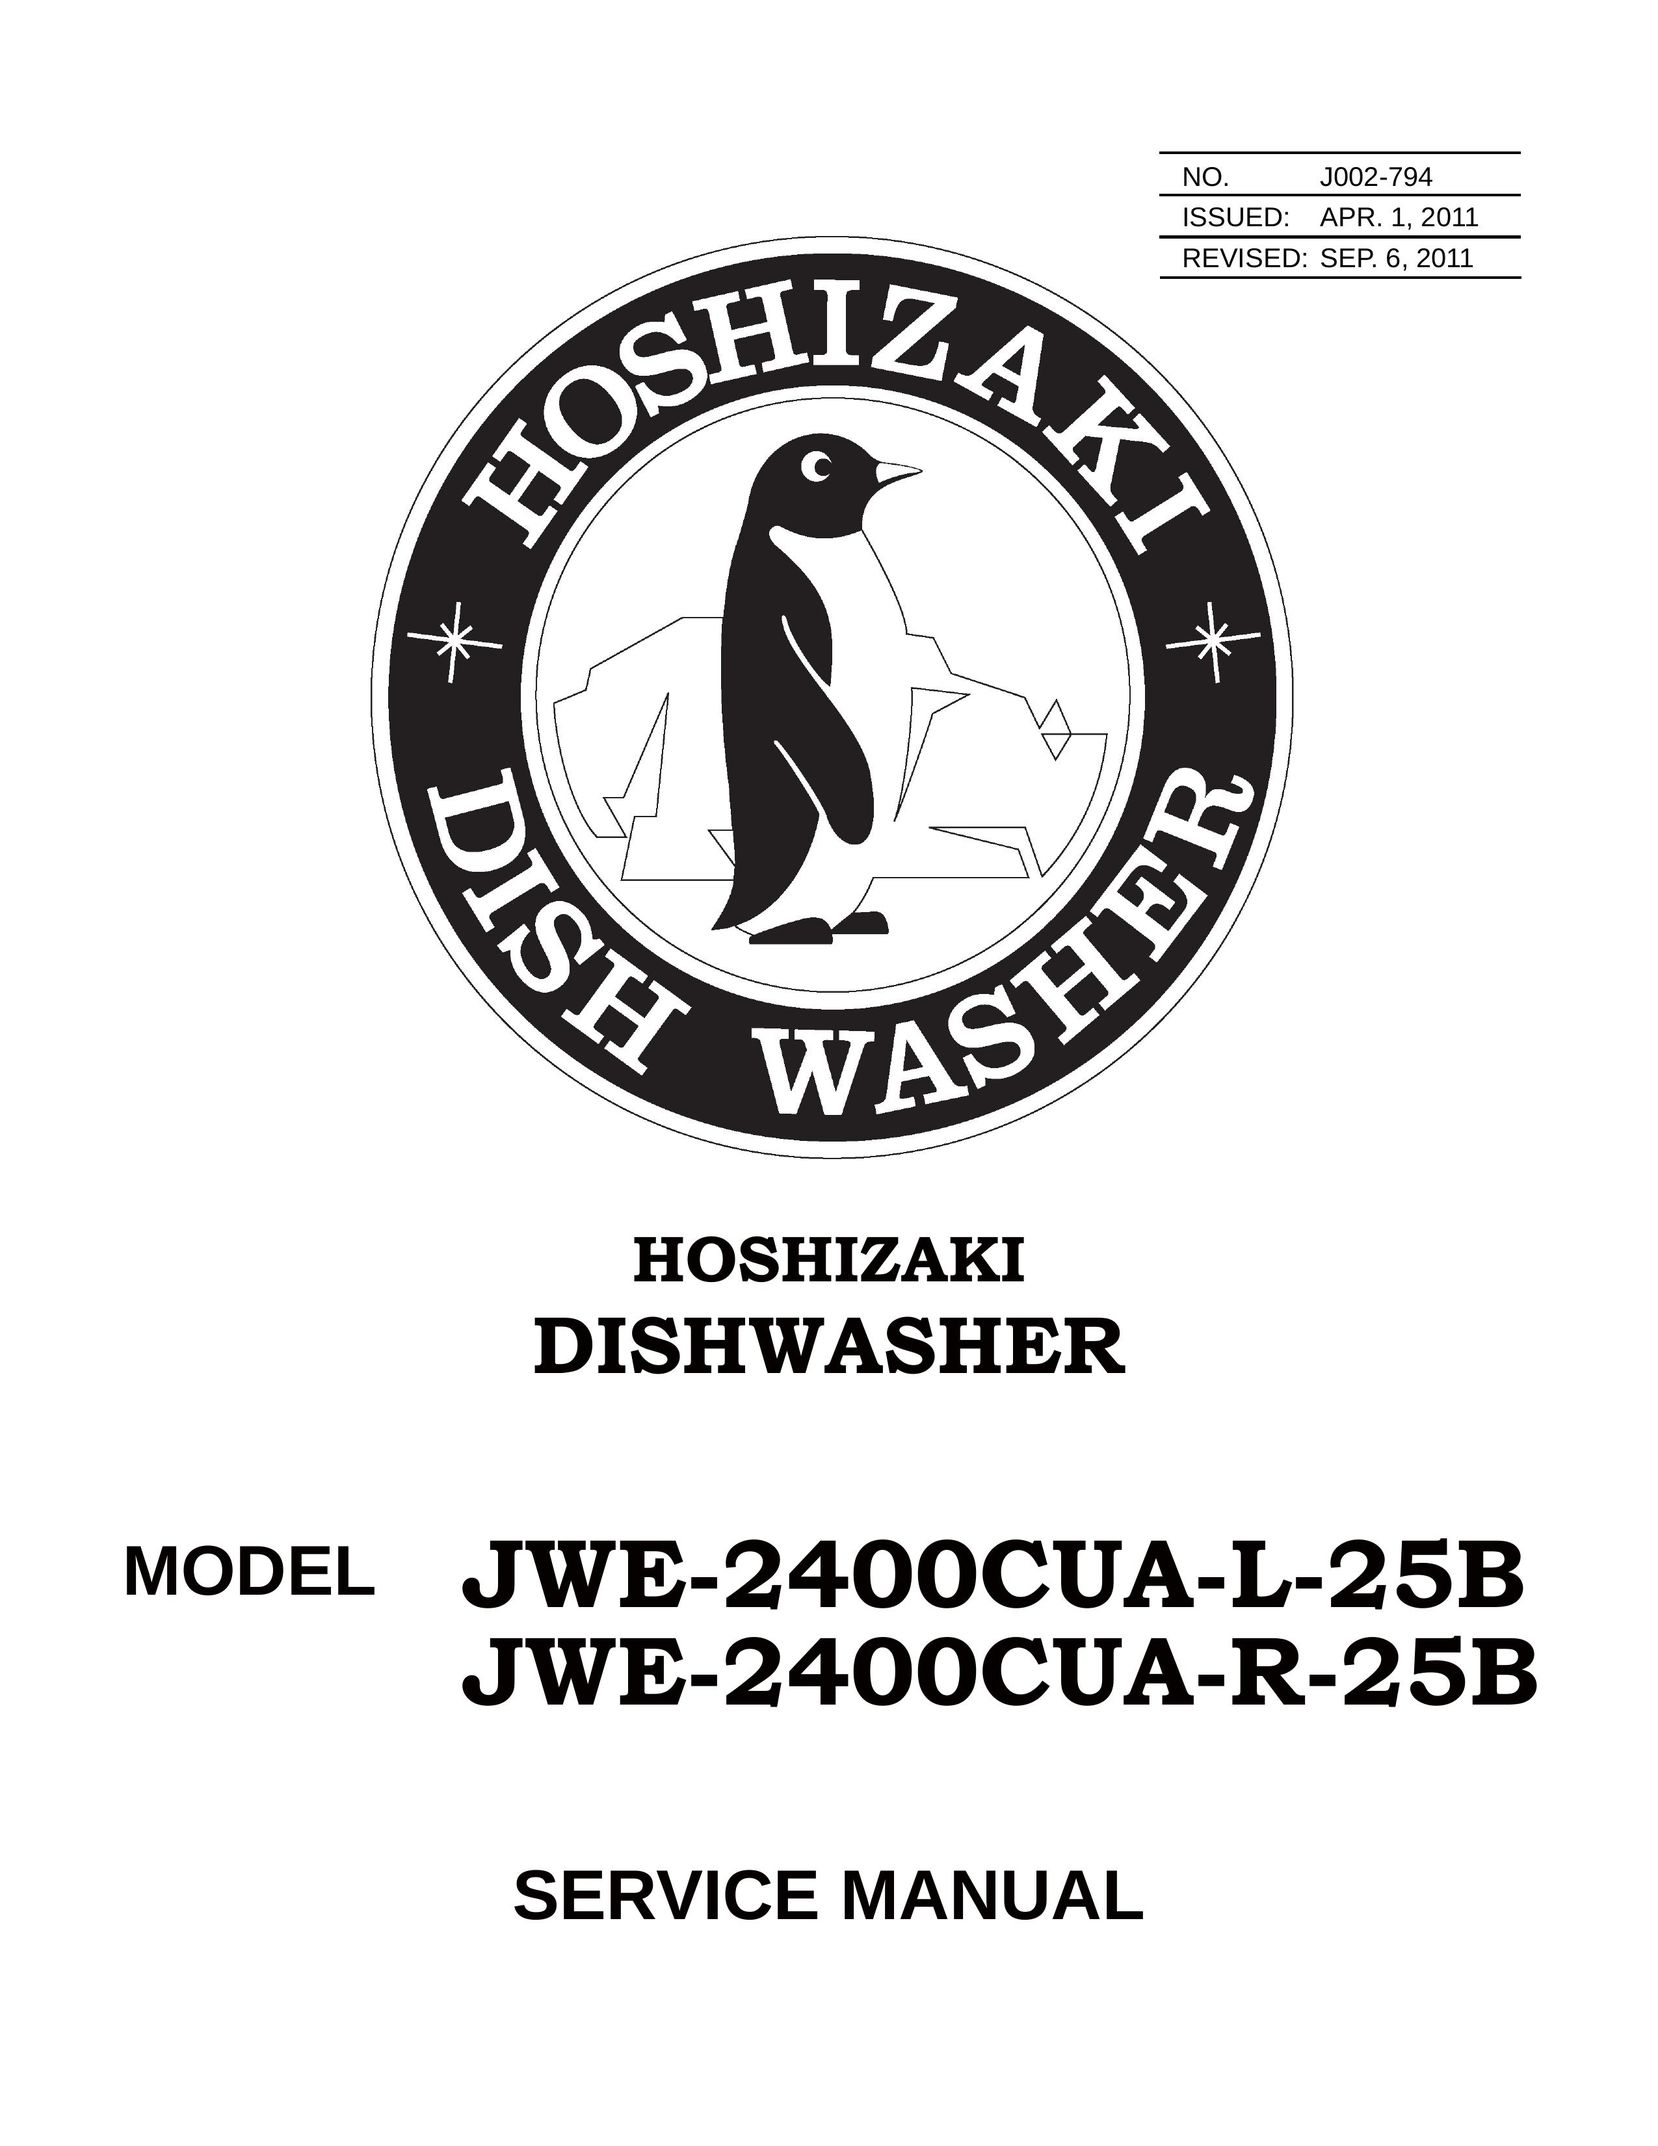 Hoshizaki JWE-24000CUA-L-25B Dishwasher User Manual